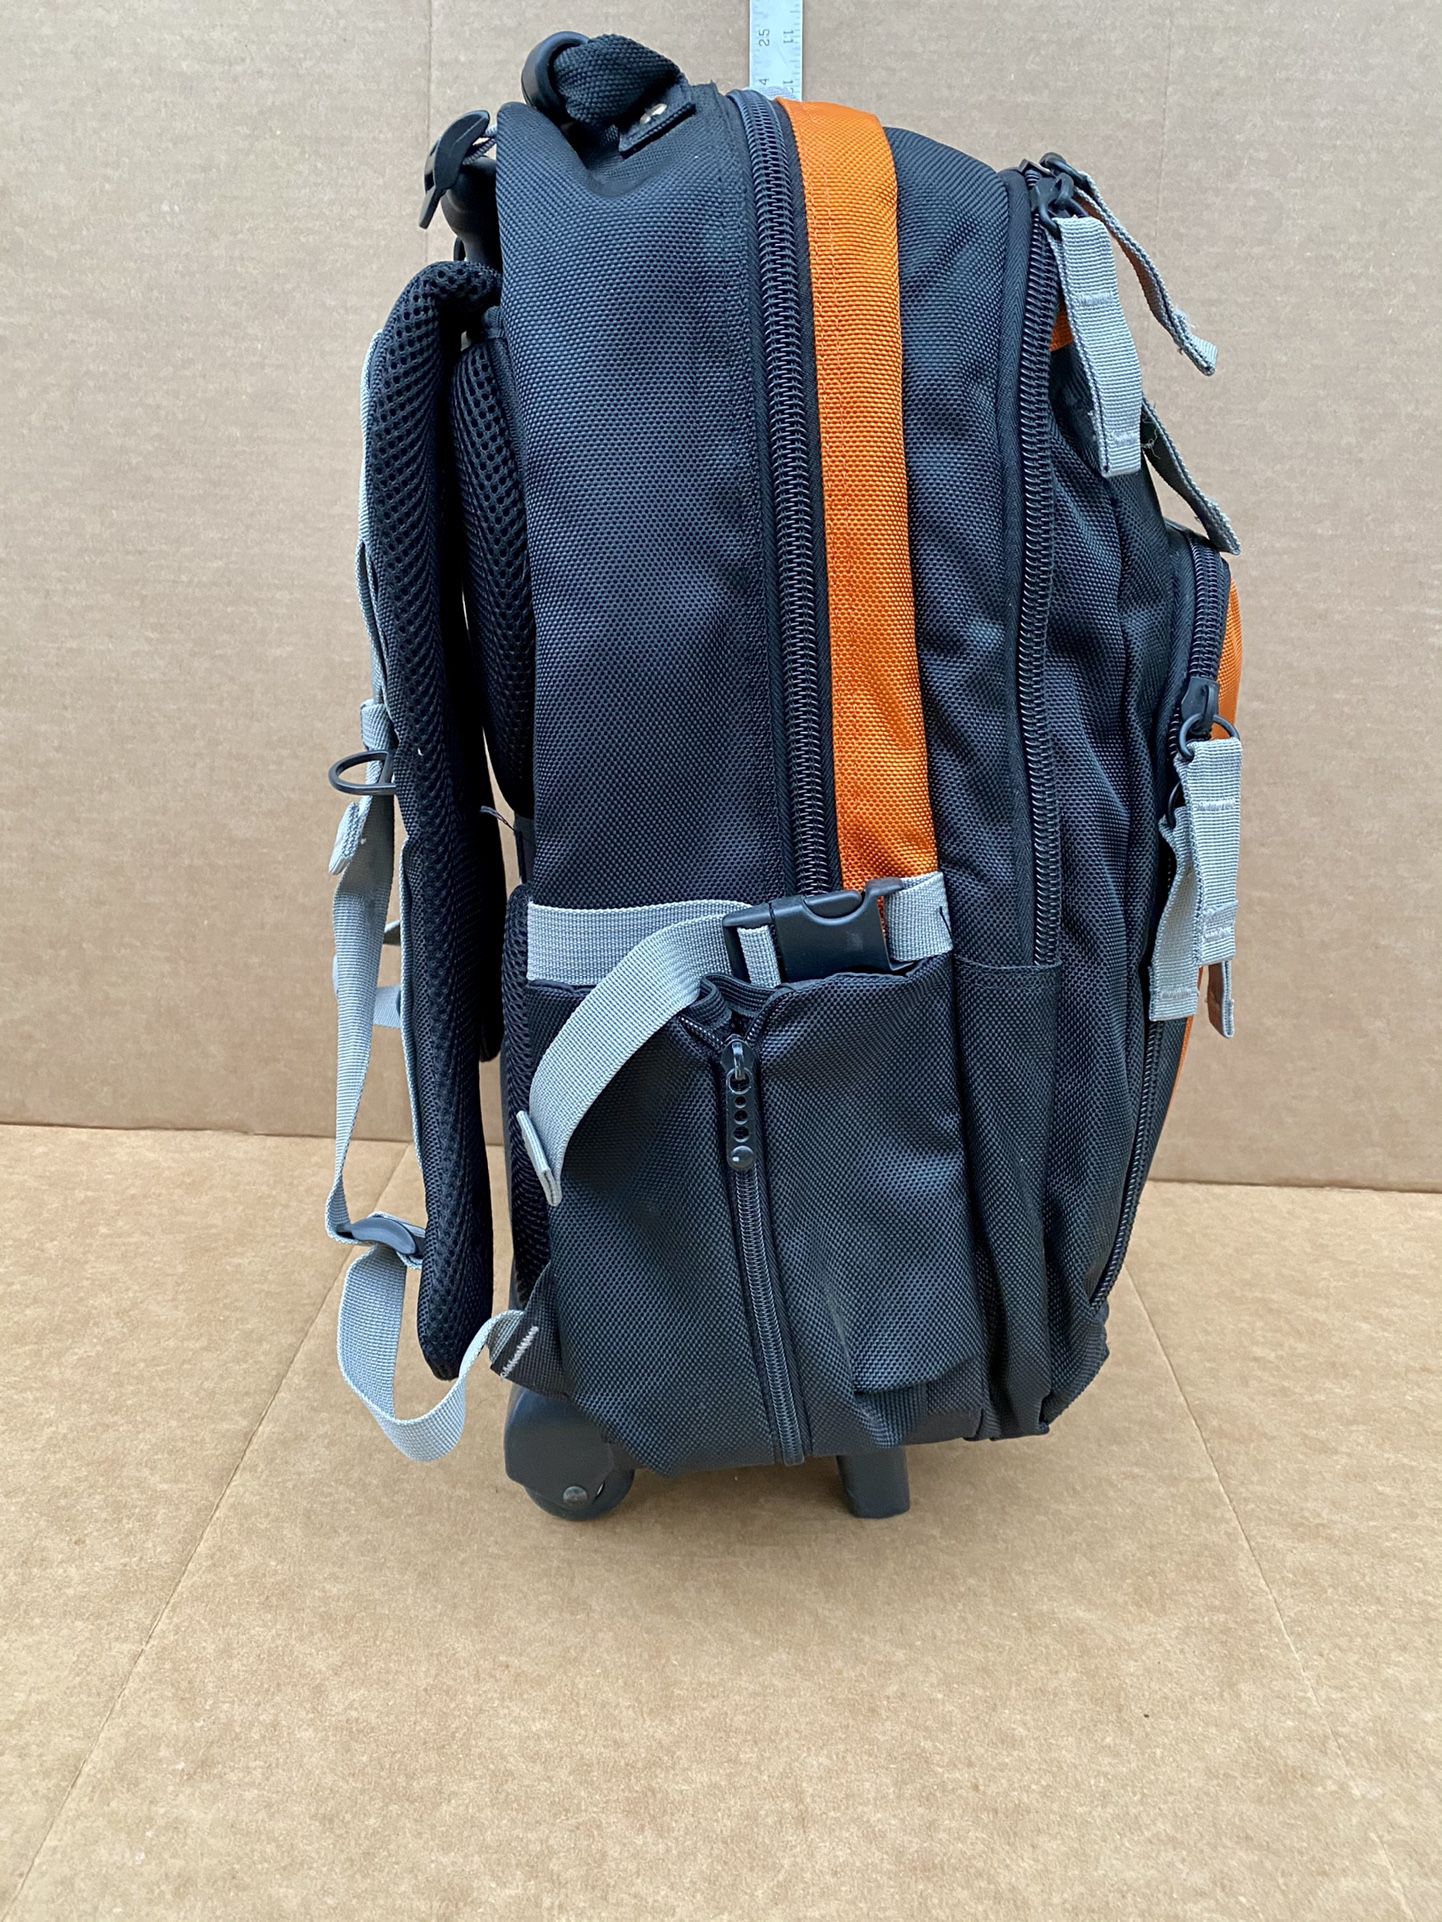 NWOT LEONIE / KIPLING Rolling Laptop Gear Backpack